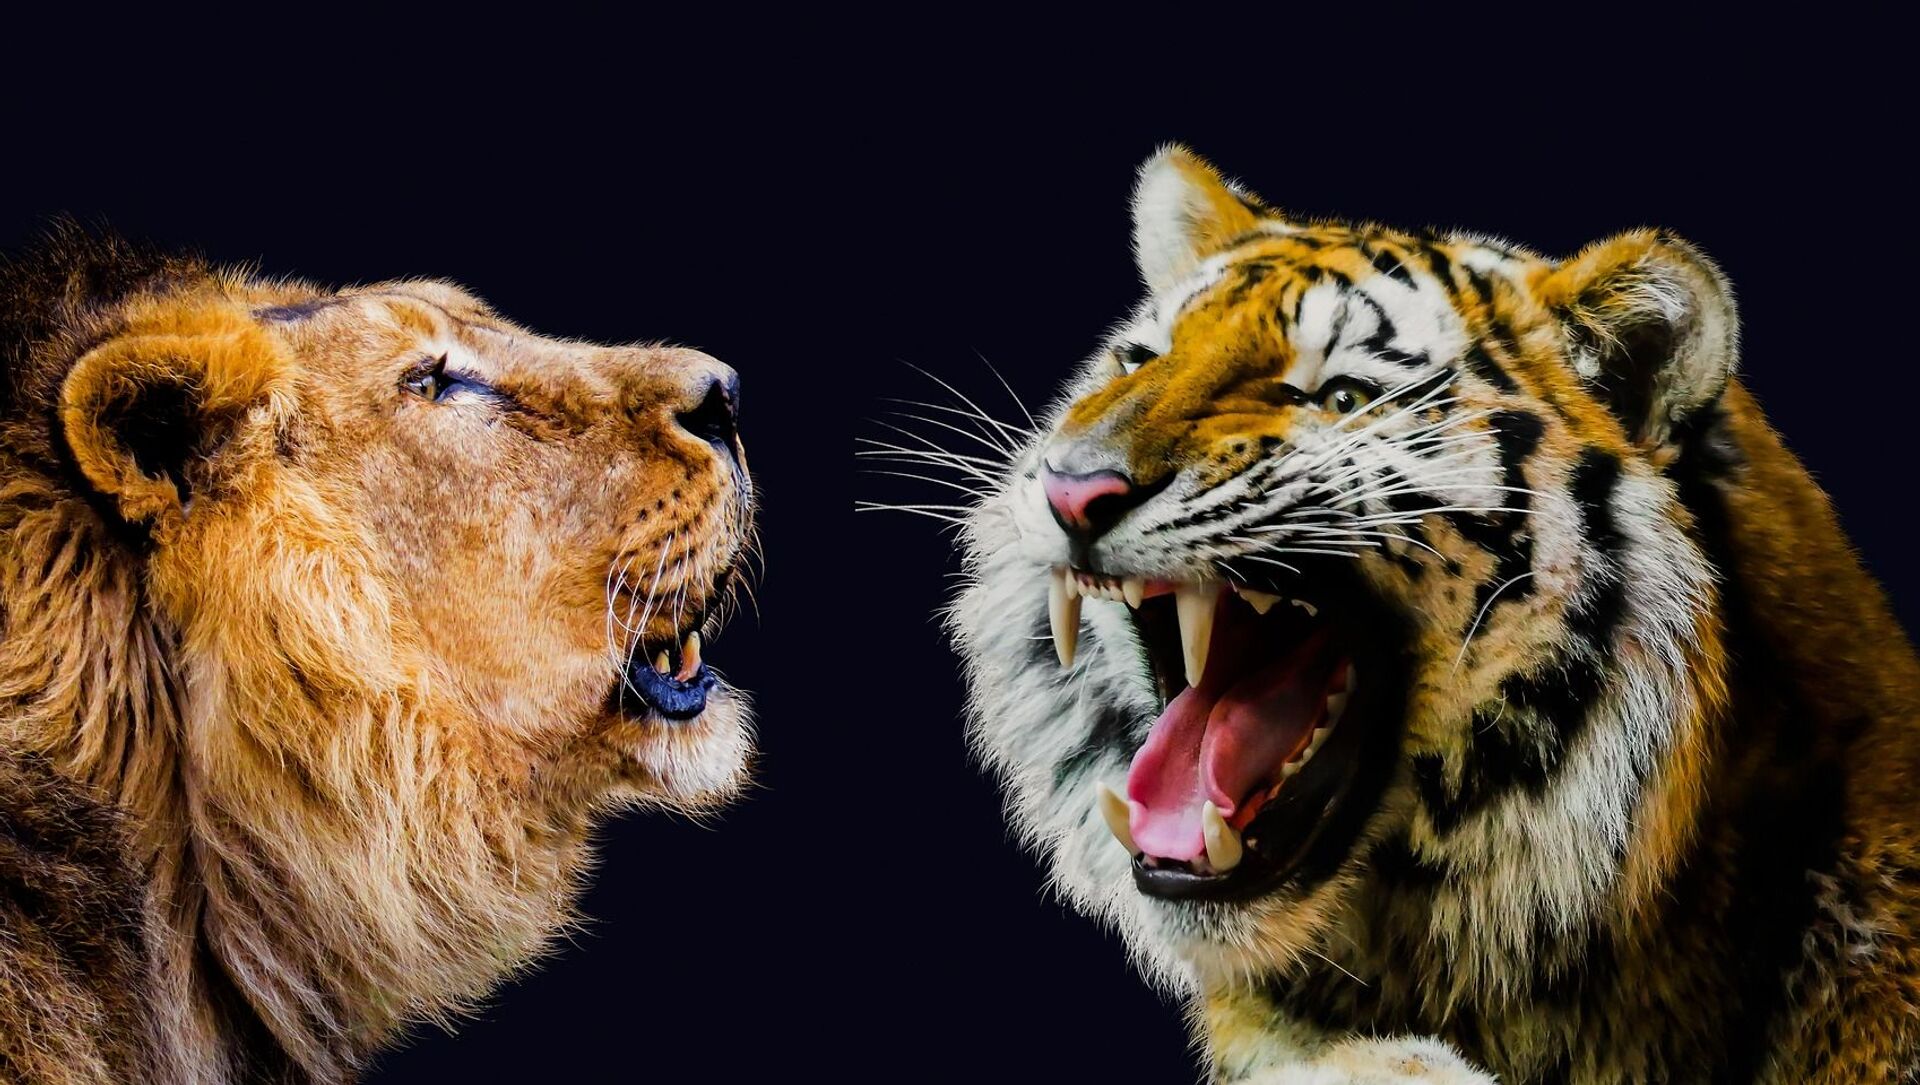 León contra tigre: una batalla clásica (vídeo) , Sputnik Mundo